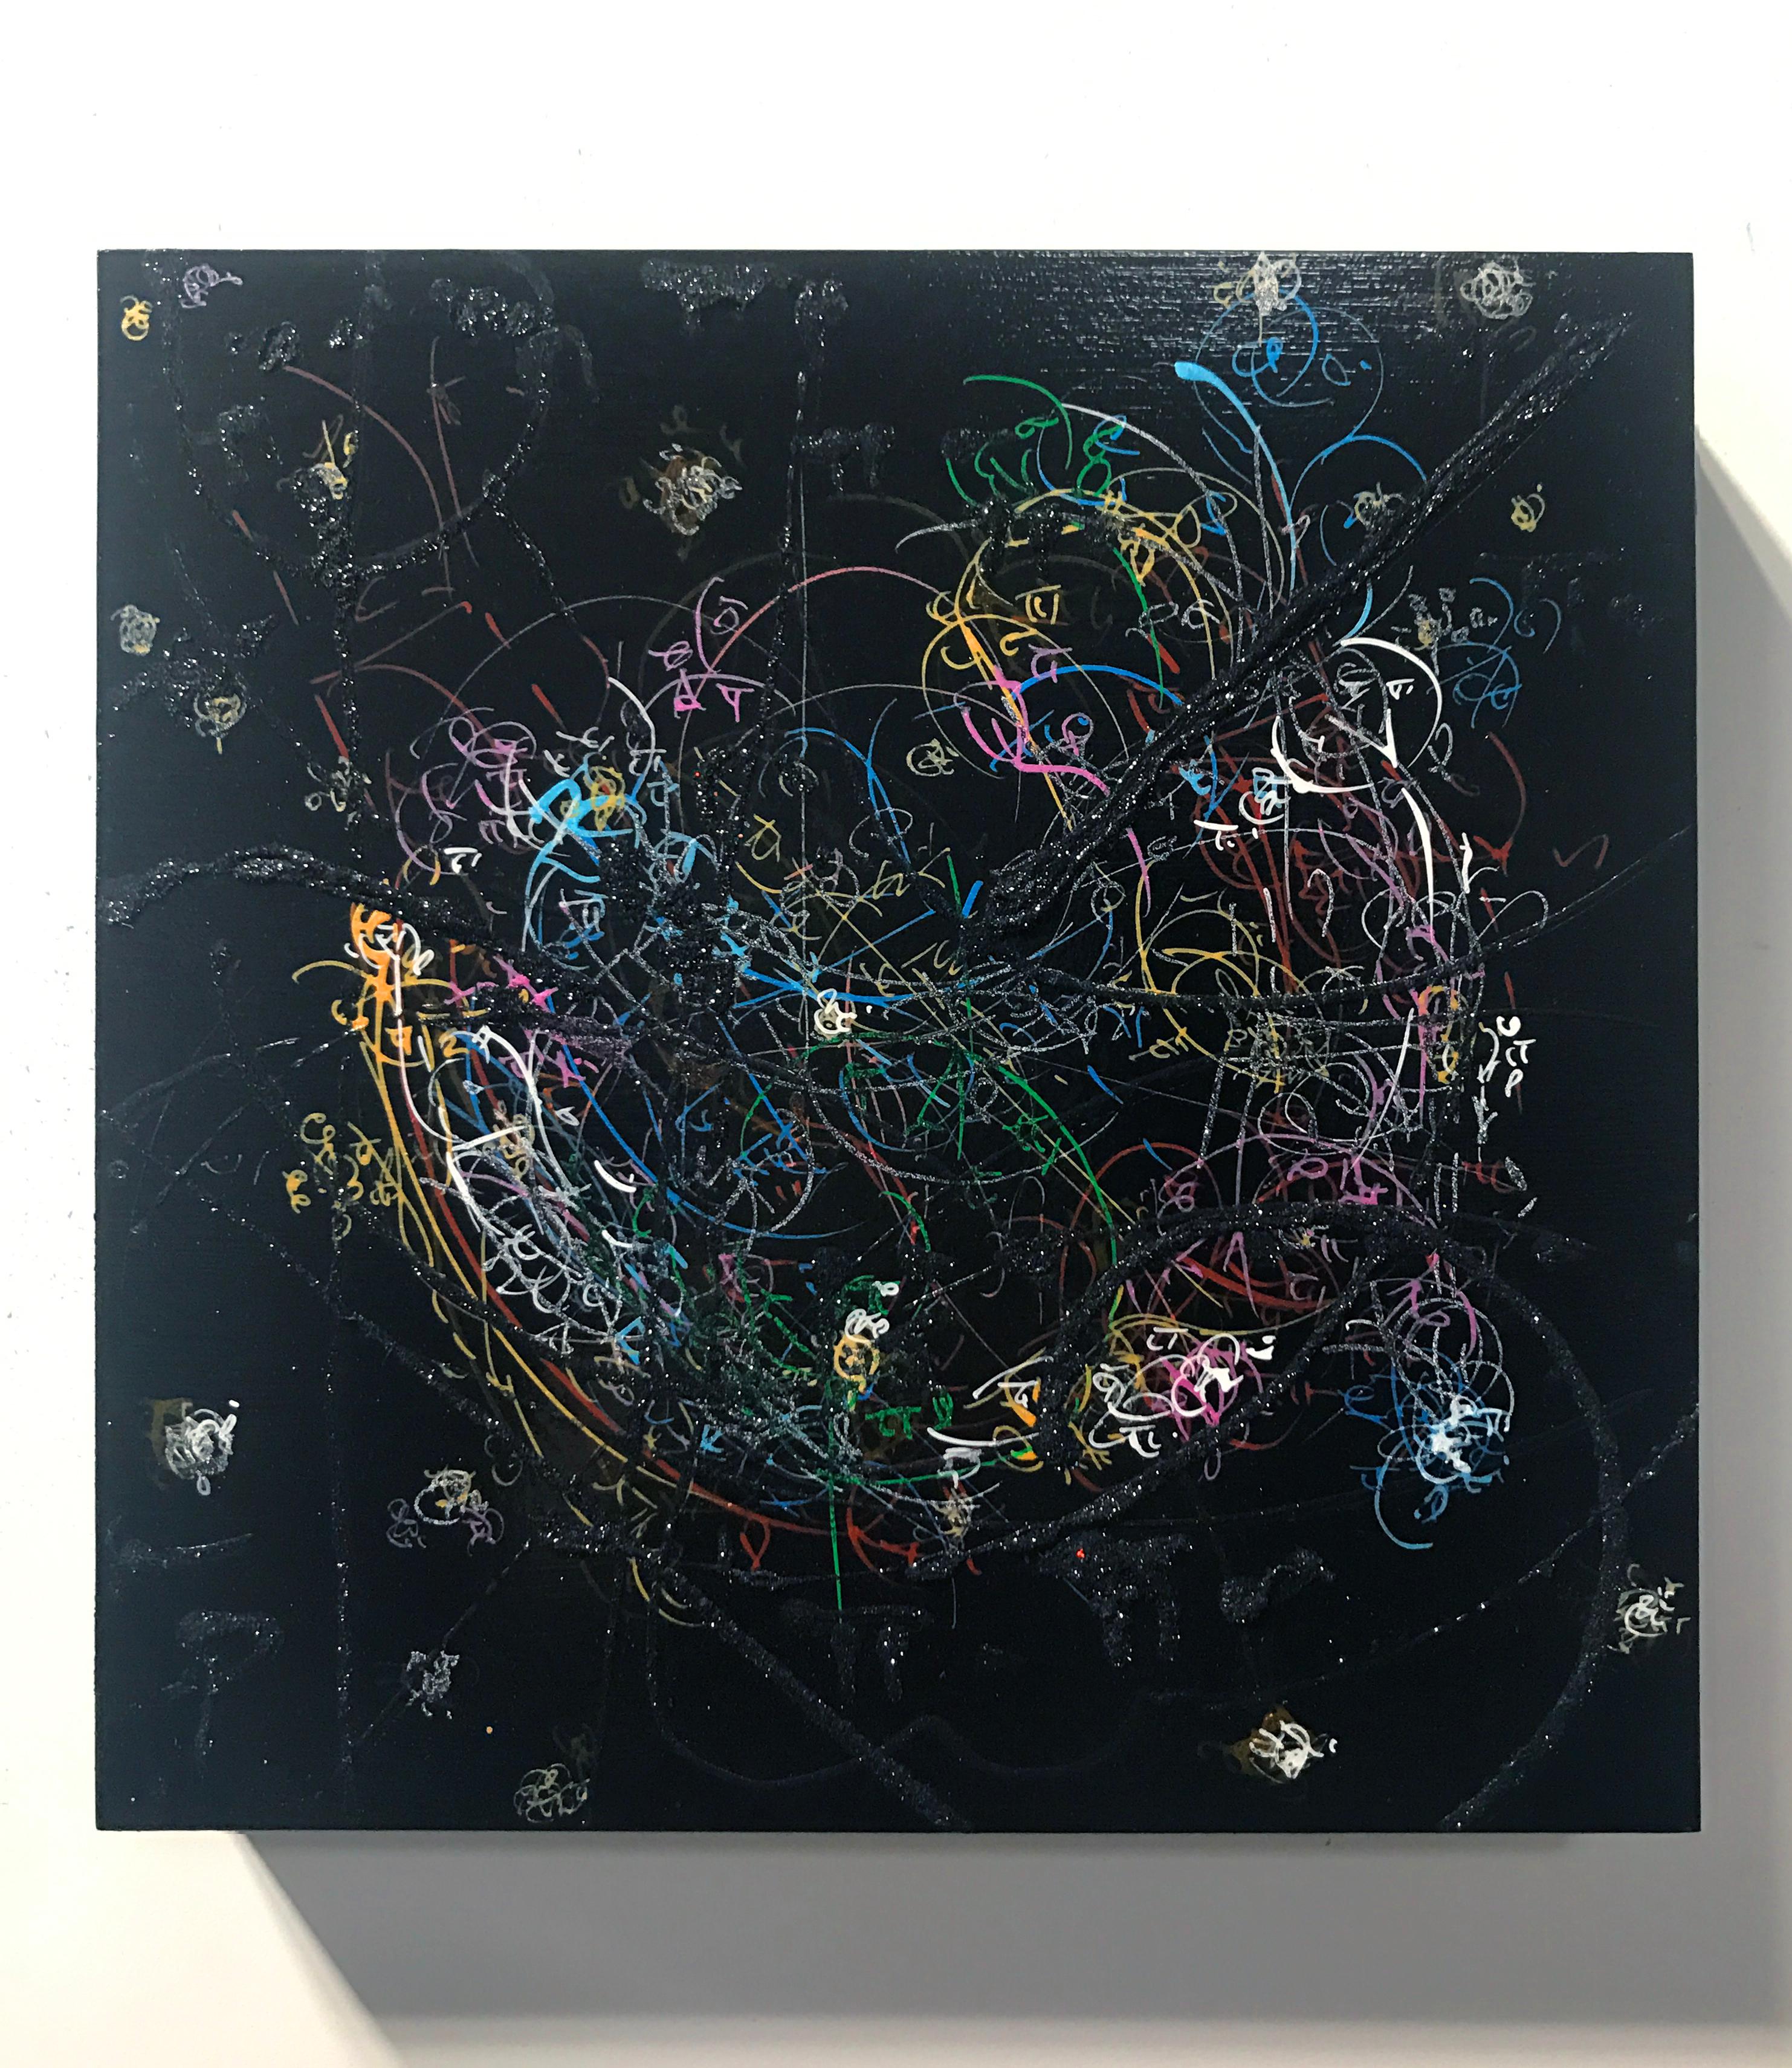 Kysa Johnson Abstract Painting - blow up 328 - the long goodbye - subatomic decay patterns and dark matter